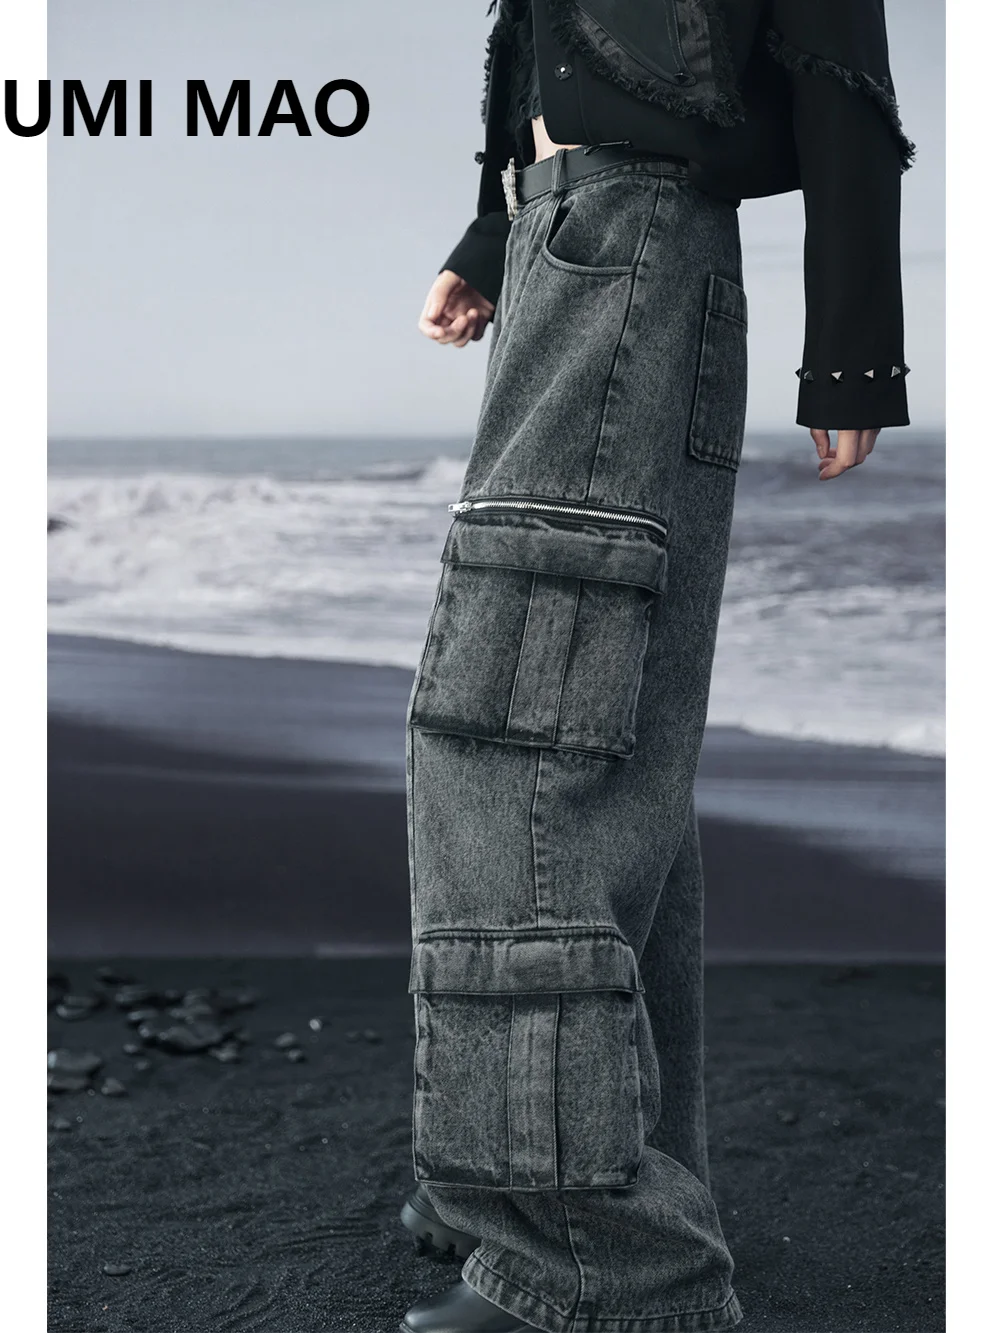 

UMI MAO Dark Loose Fitting Workwear Jeans Women's Autumn New Vintage Black Asymmetric Wide Leg Pants